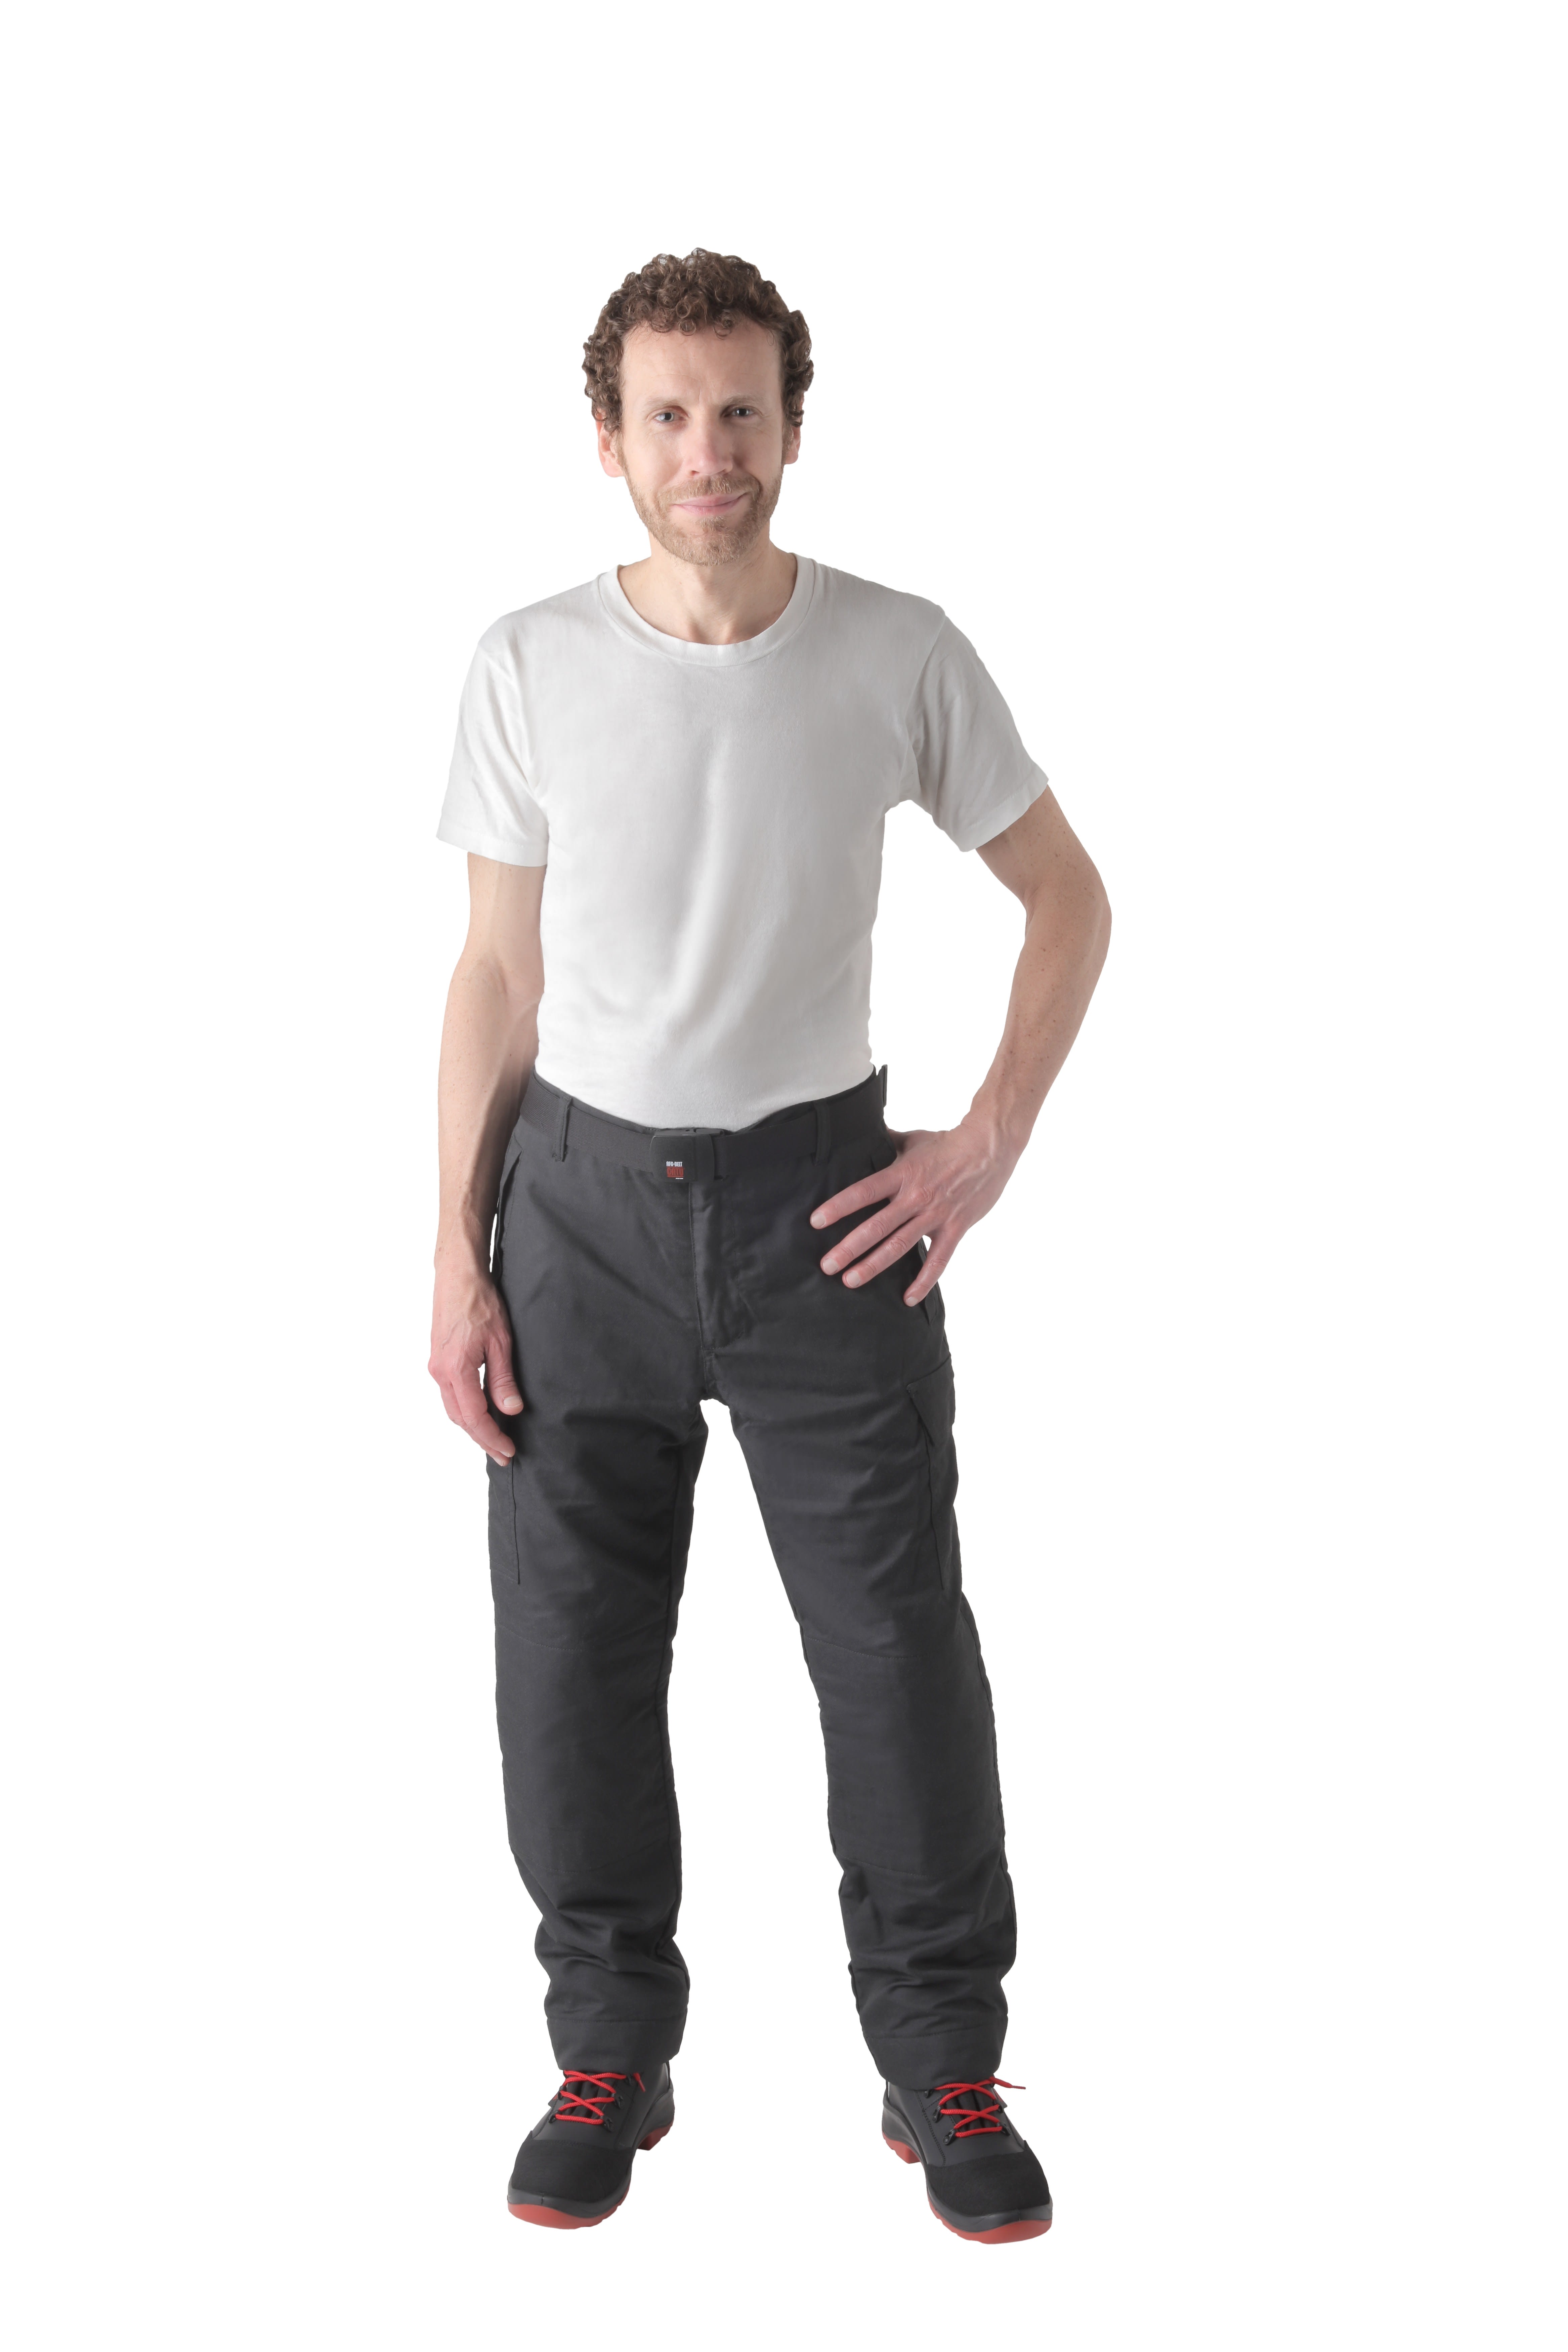 Catu - pantalon 25-40 cal-cm2 noir non feu soudure AS-5xl